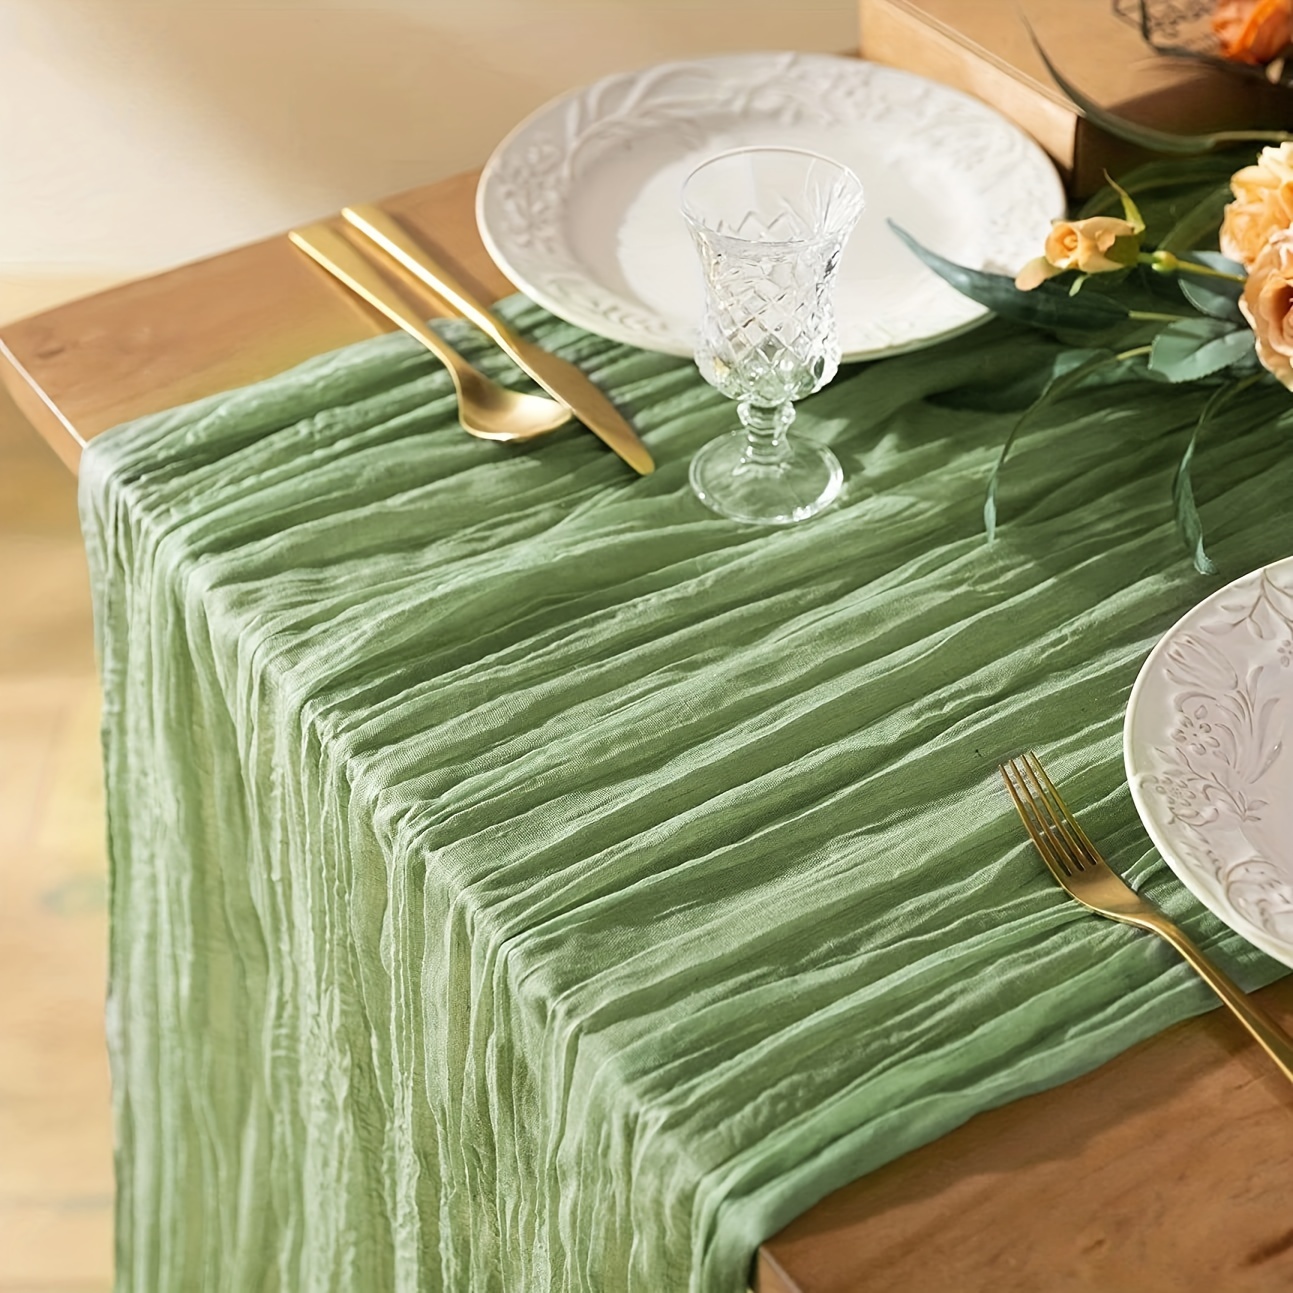 Compre Semi-Sheer Gauze Table Runner Sálvia Cheesecloth Table Setting  Jantar Vintage Festa de Casamento Banquetes de Natal Arcos Decoração do  Bolo